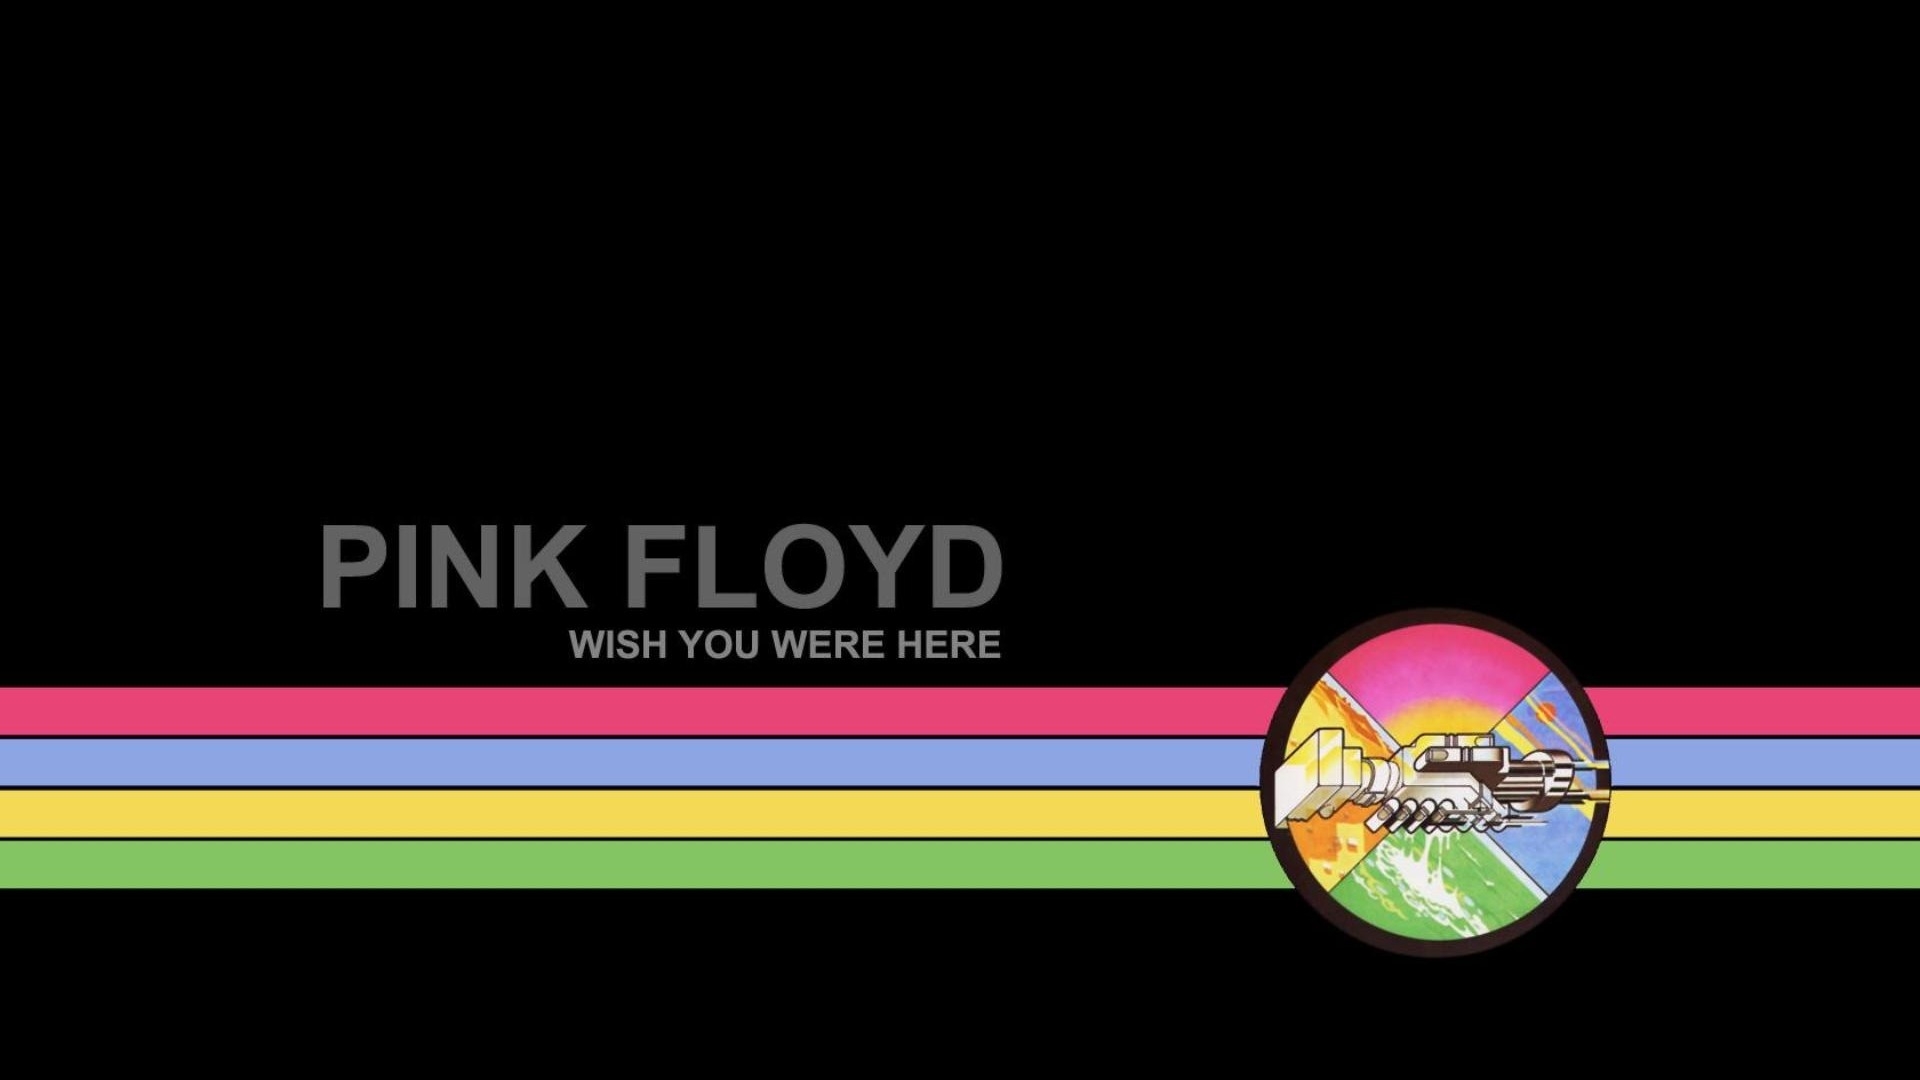 Pink Floyd Wallpaper Hd wallpaper   1109486 1920x1080